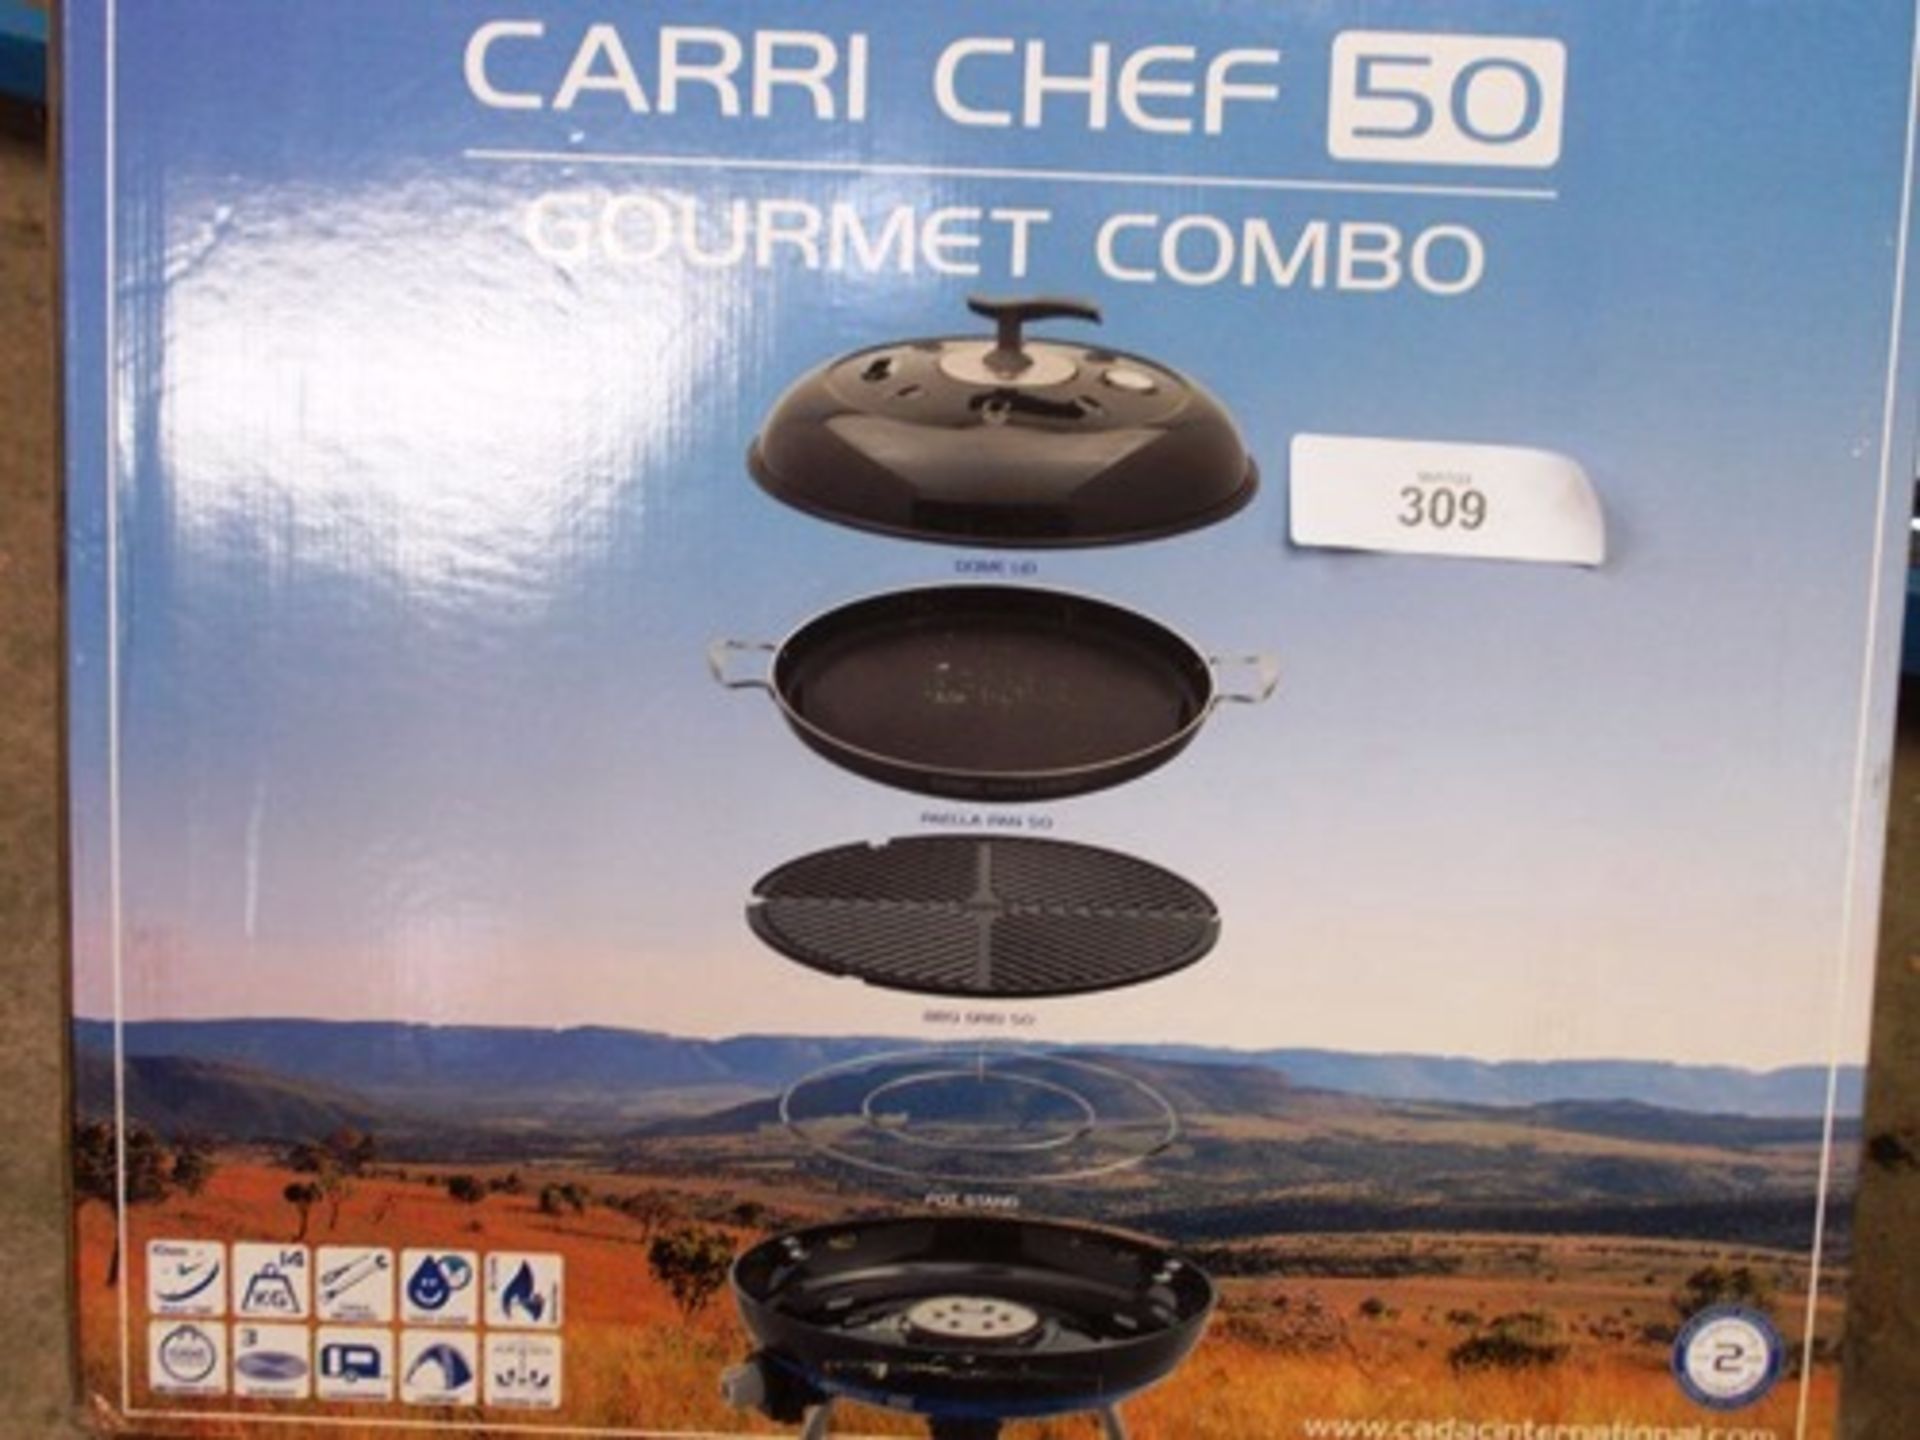 1 x Cadac Carri Chef 50 gourmet combo, Model 8910 - New in box (ES16B)